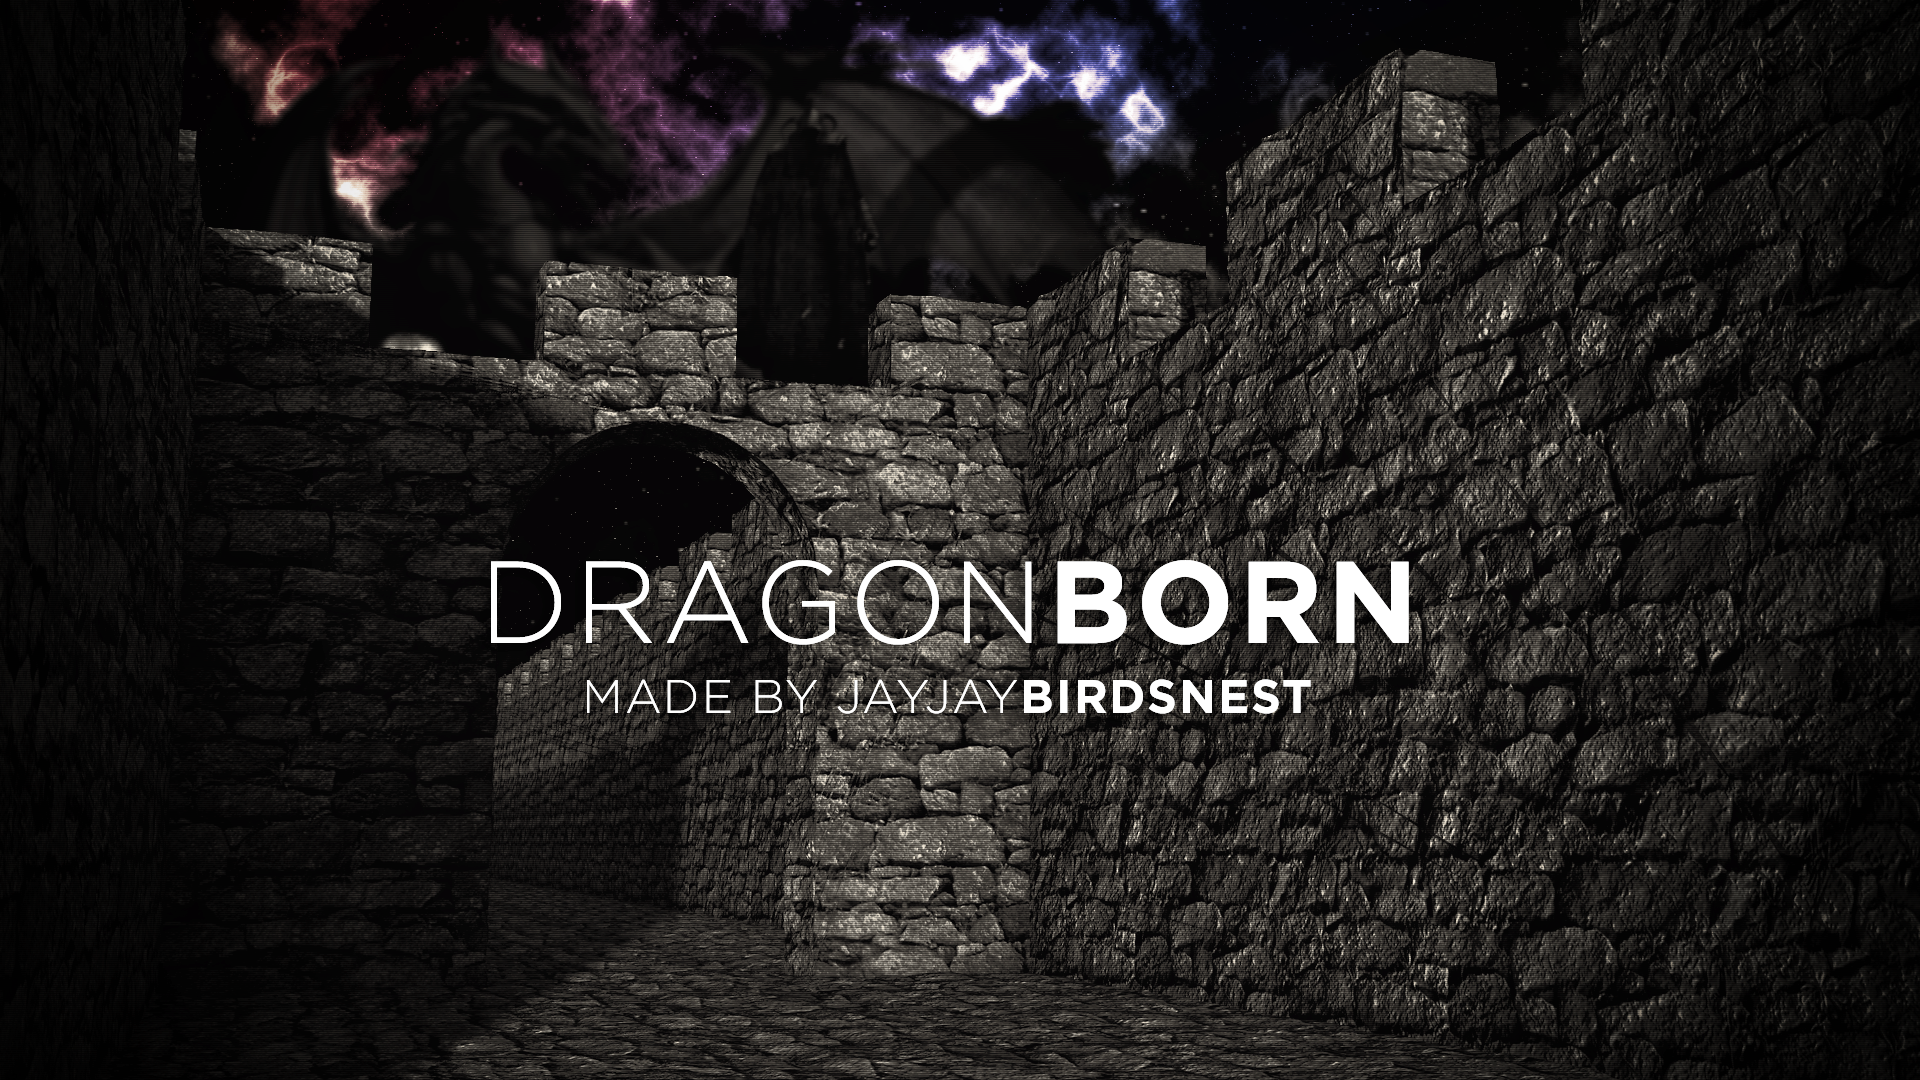 Dragonborn Skyrim Wallpaper Jayjaybirdsnest 2d And 3d Design